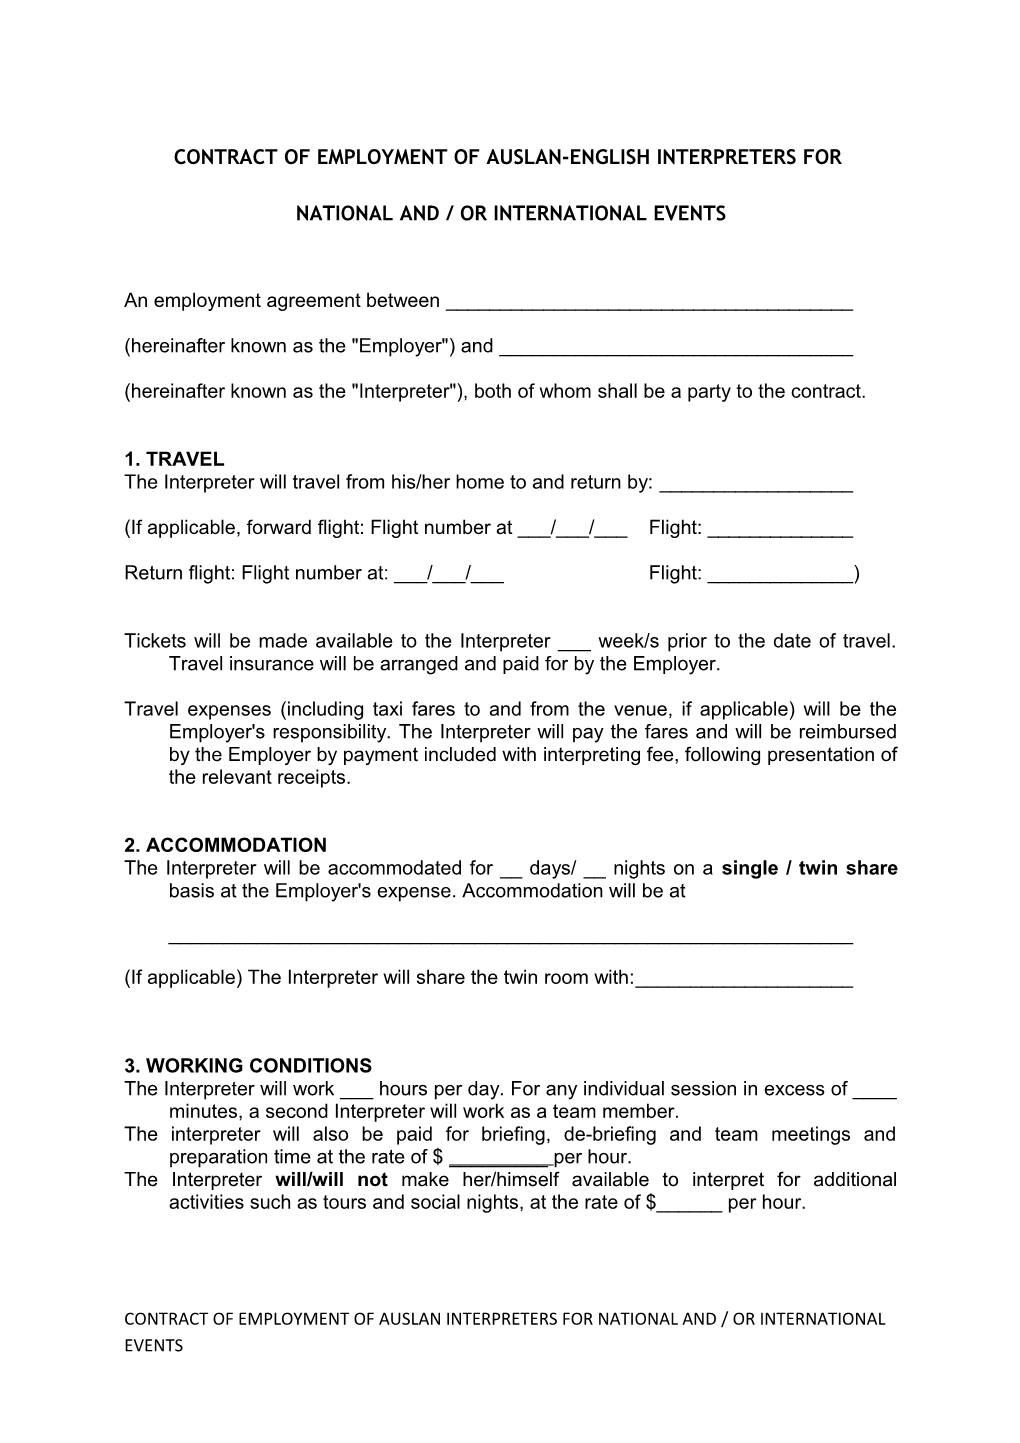 Contract of Employment of Auslan Interpreters For